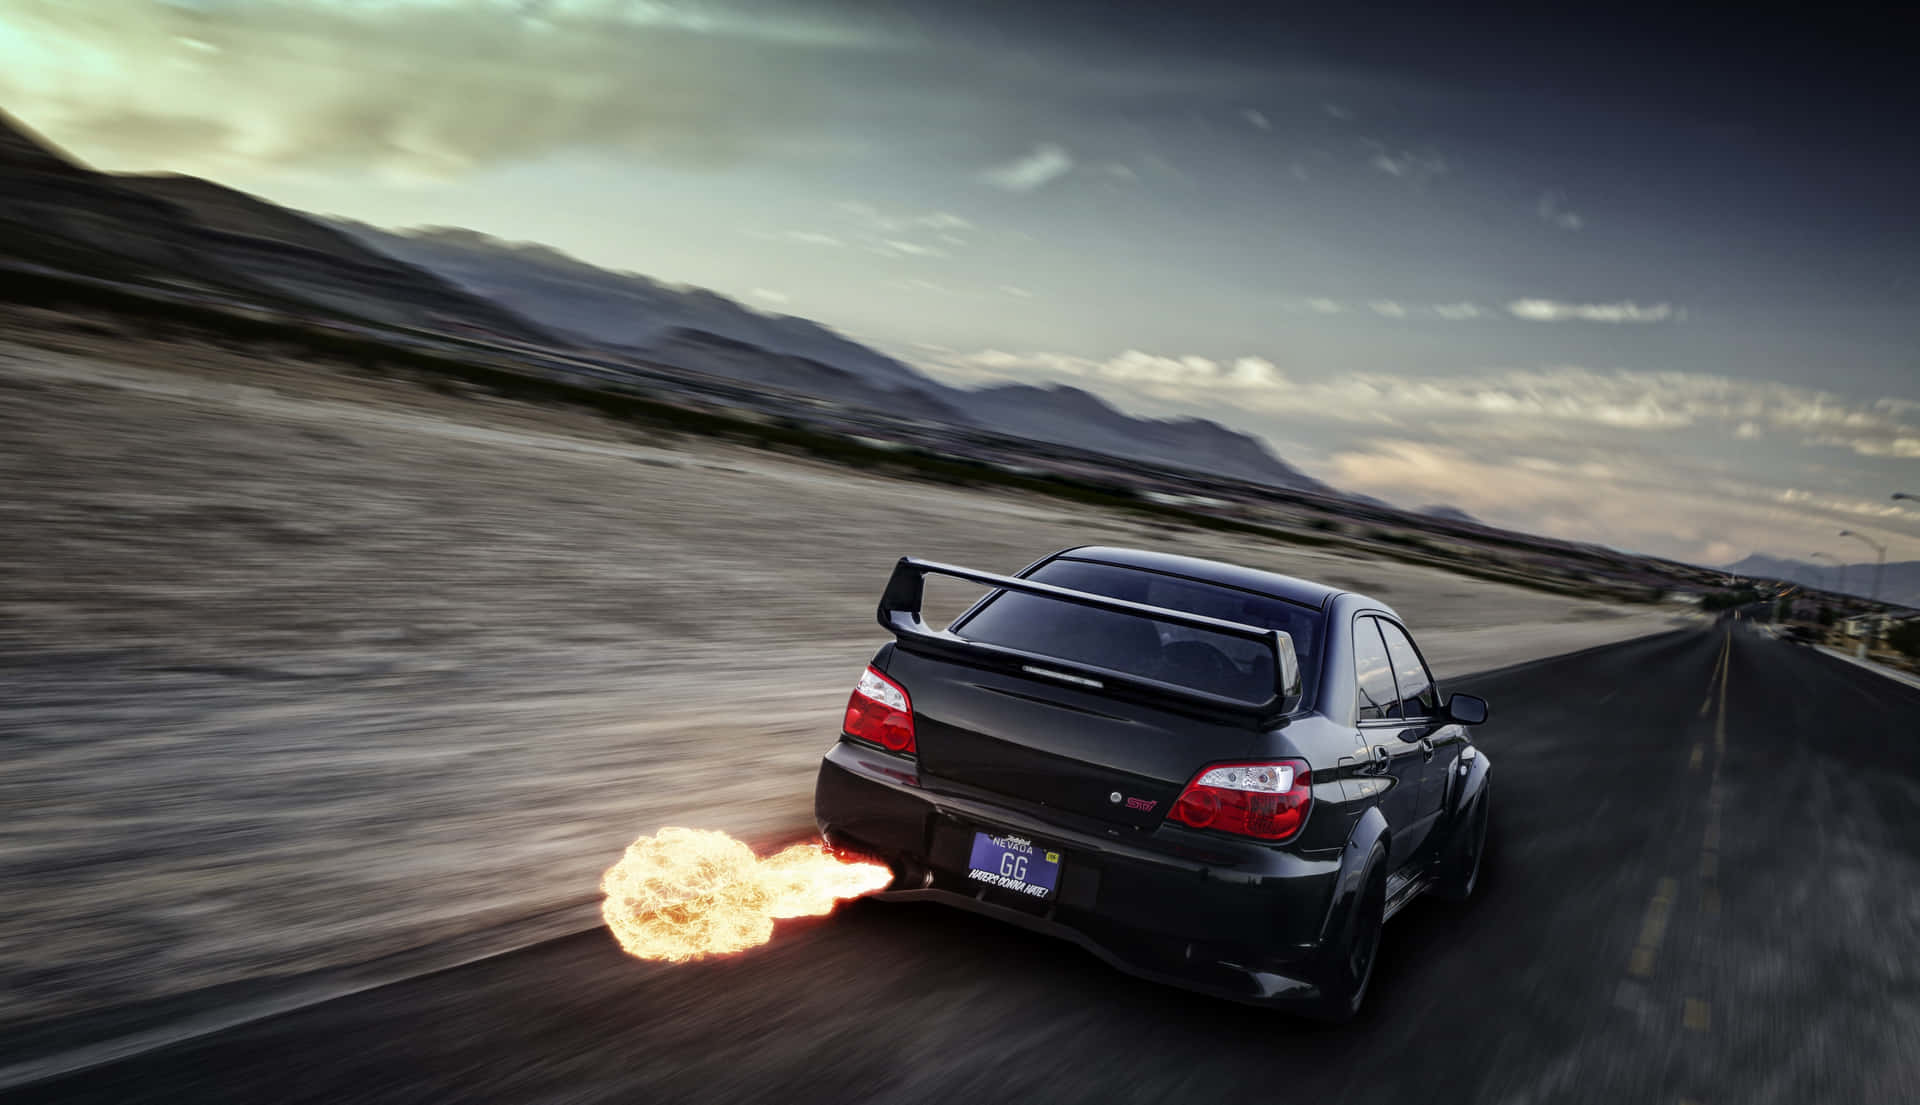 Caption: Mastering The Road - The Subaru Impreza Wallpaper